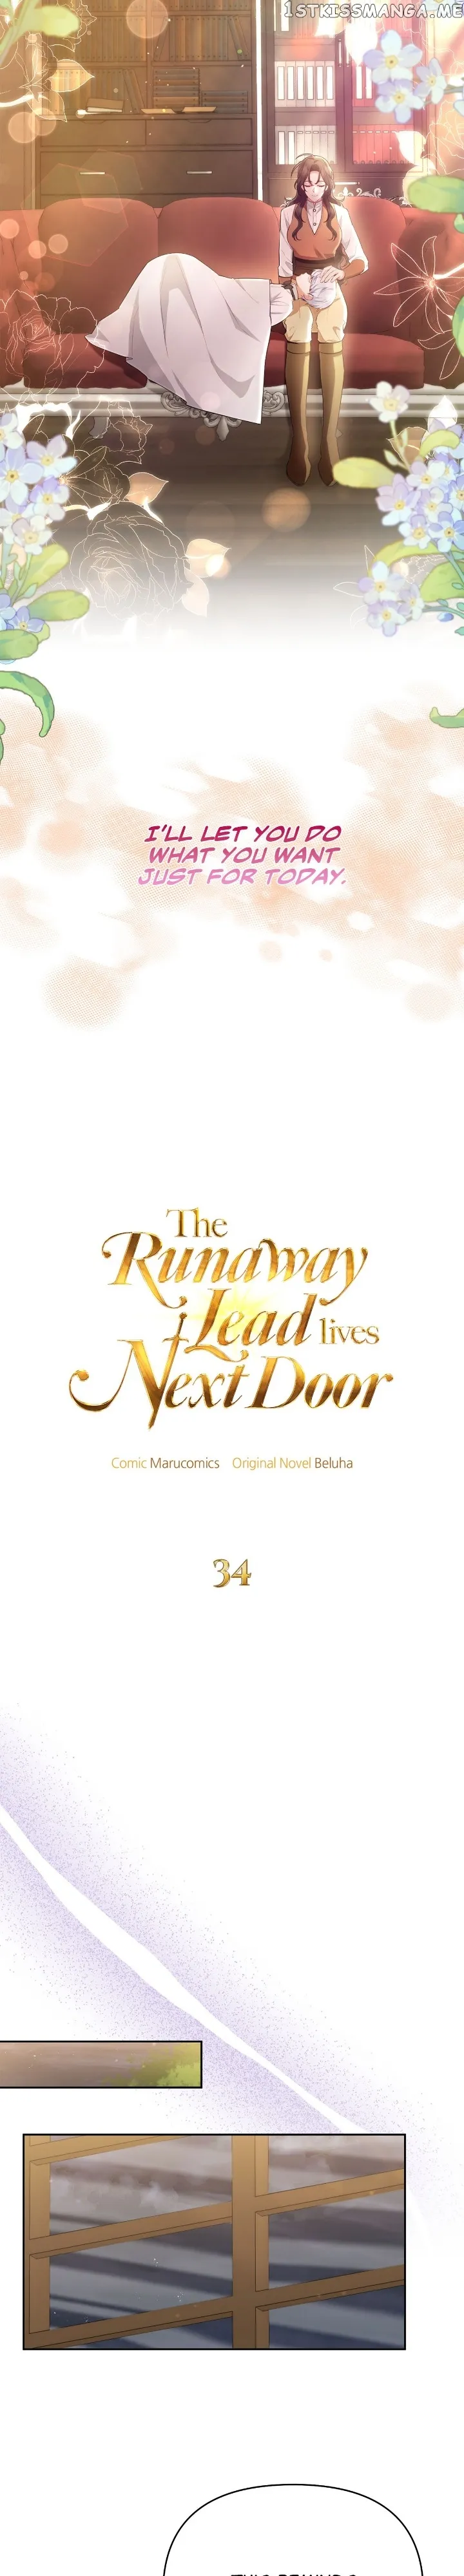 The Runaway Lead Lives Next Door - Page 3